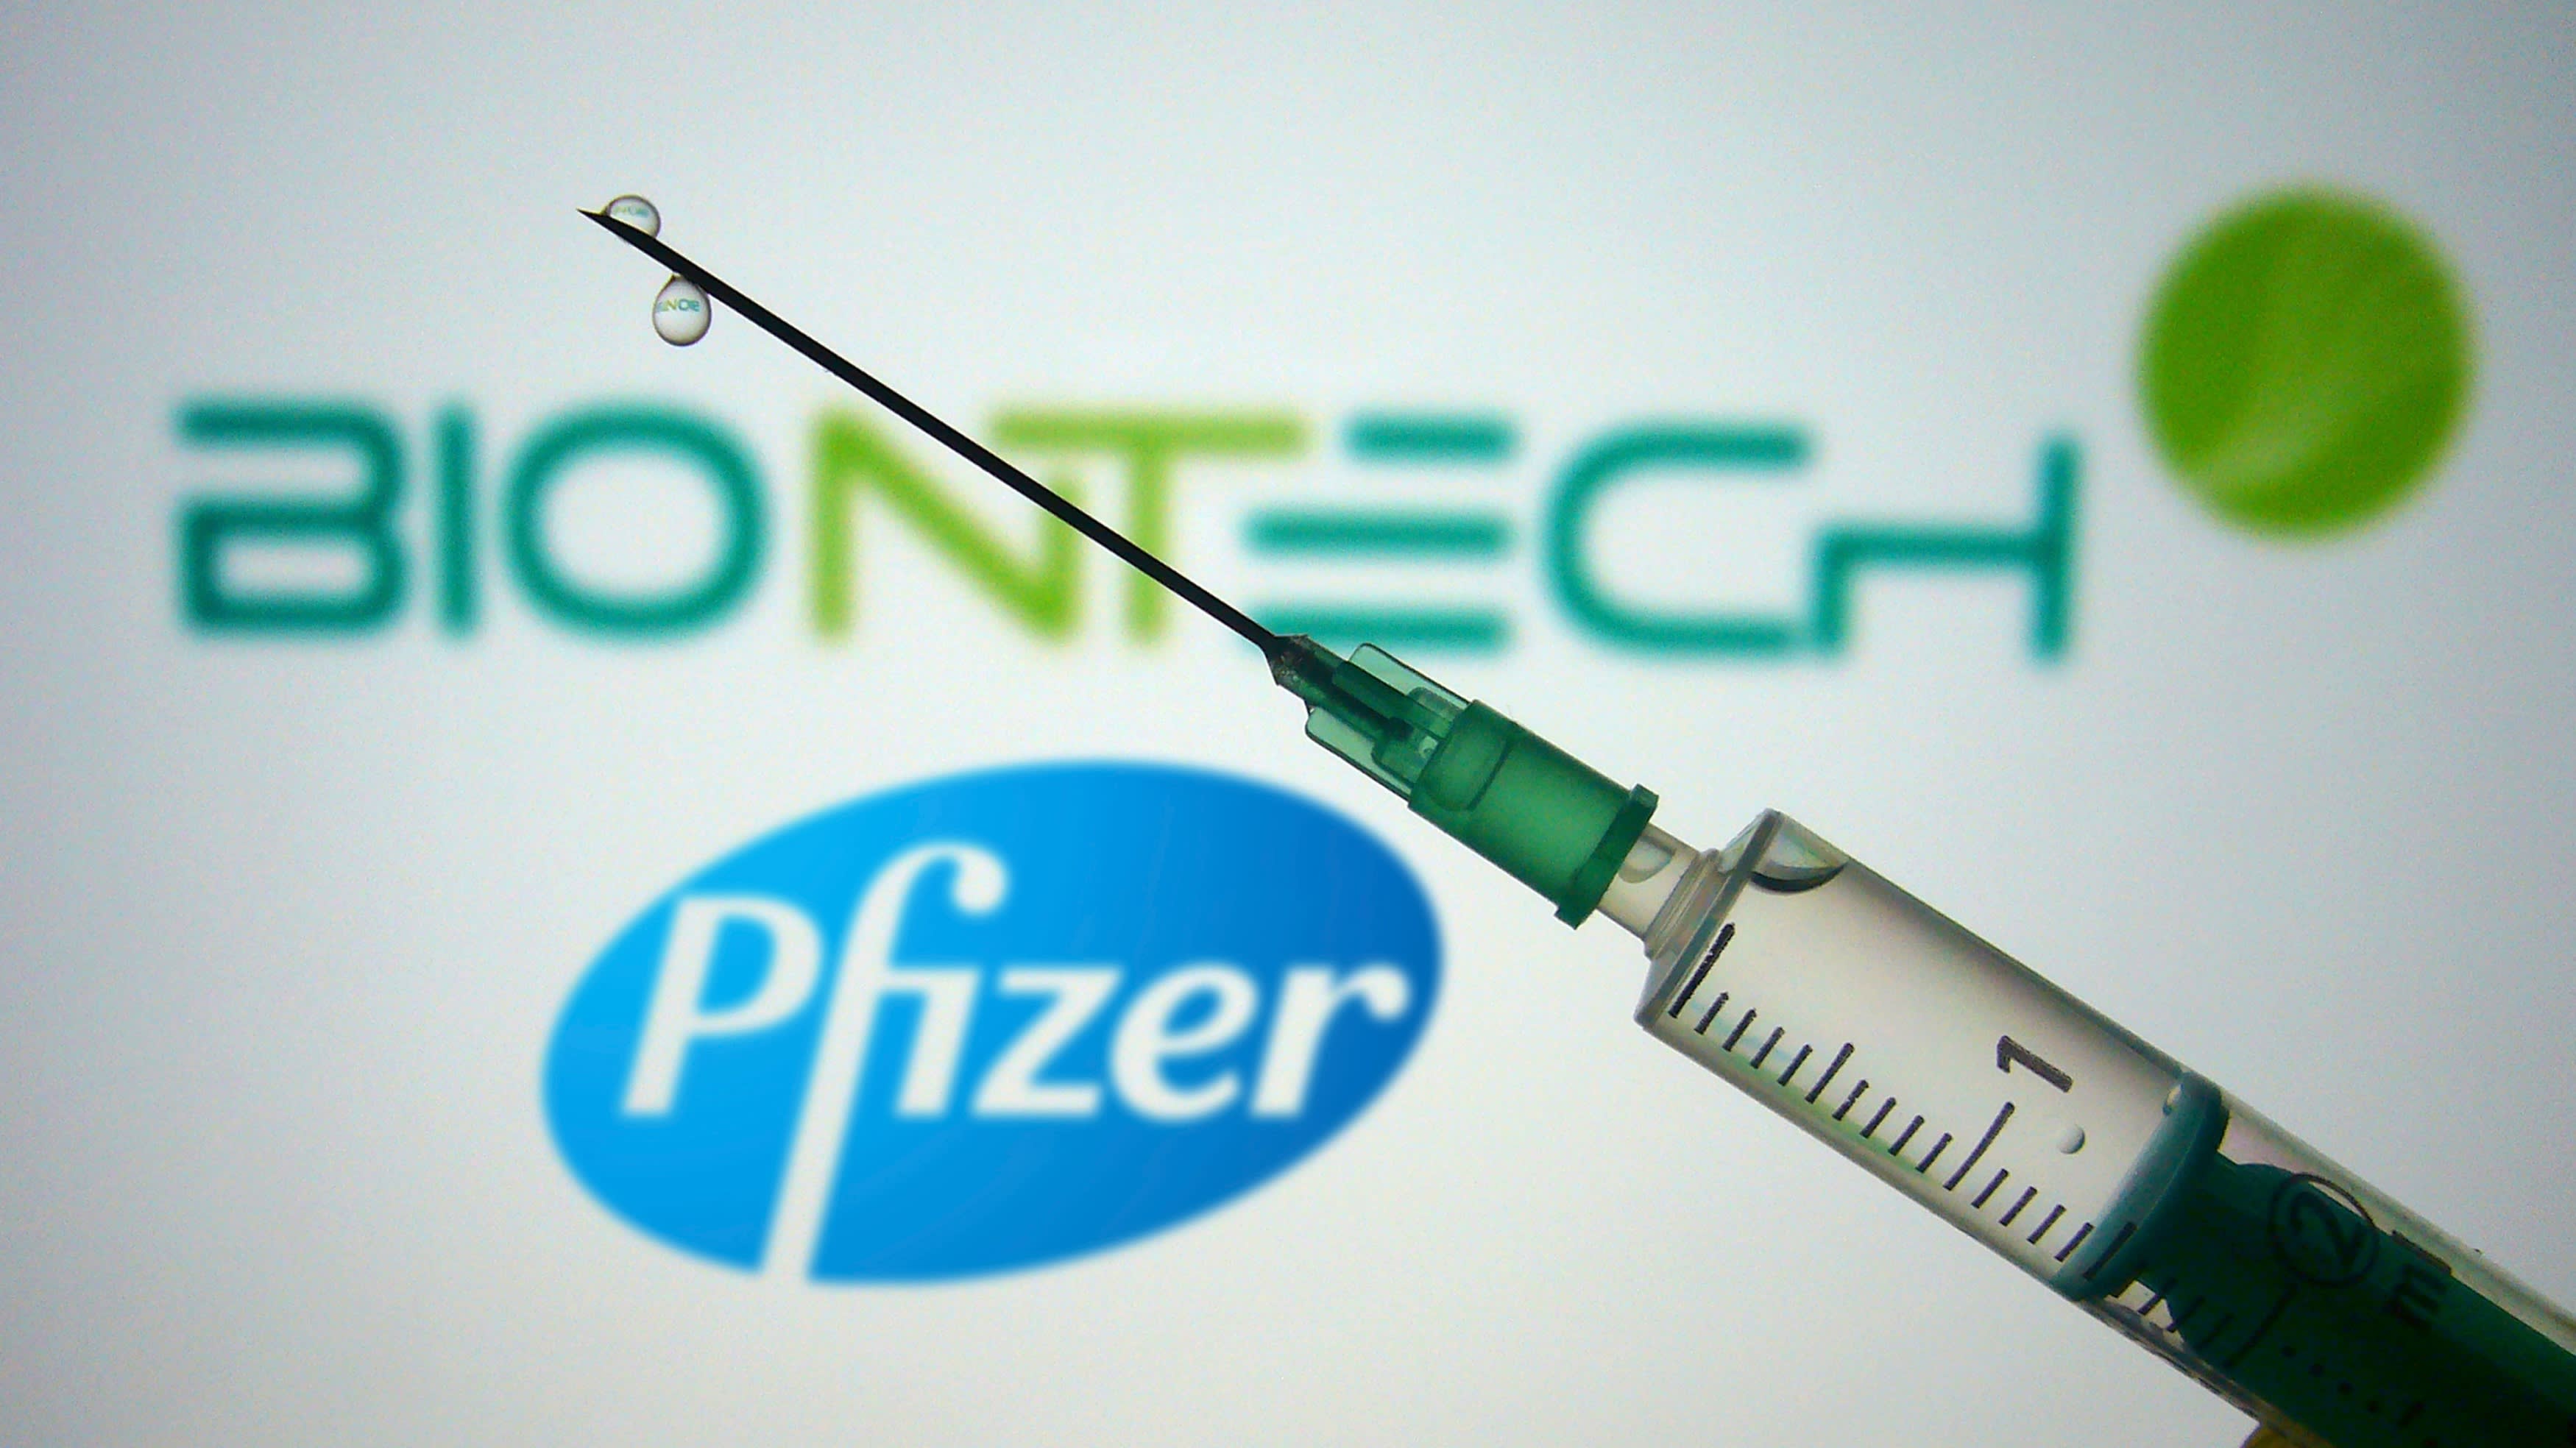 واکسن کرونا فایزر